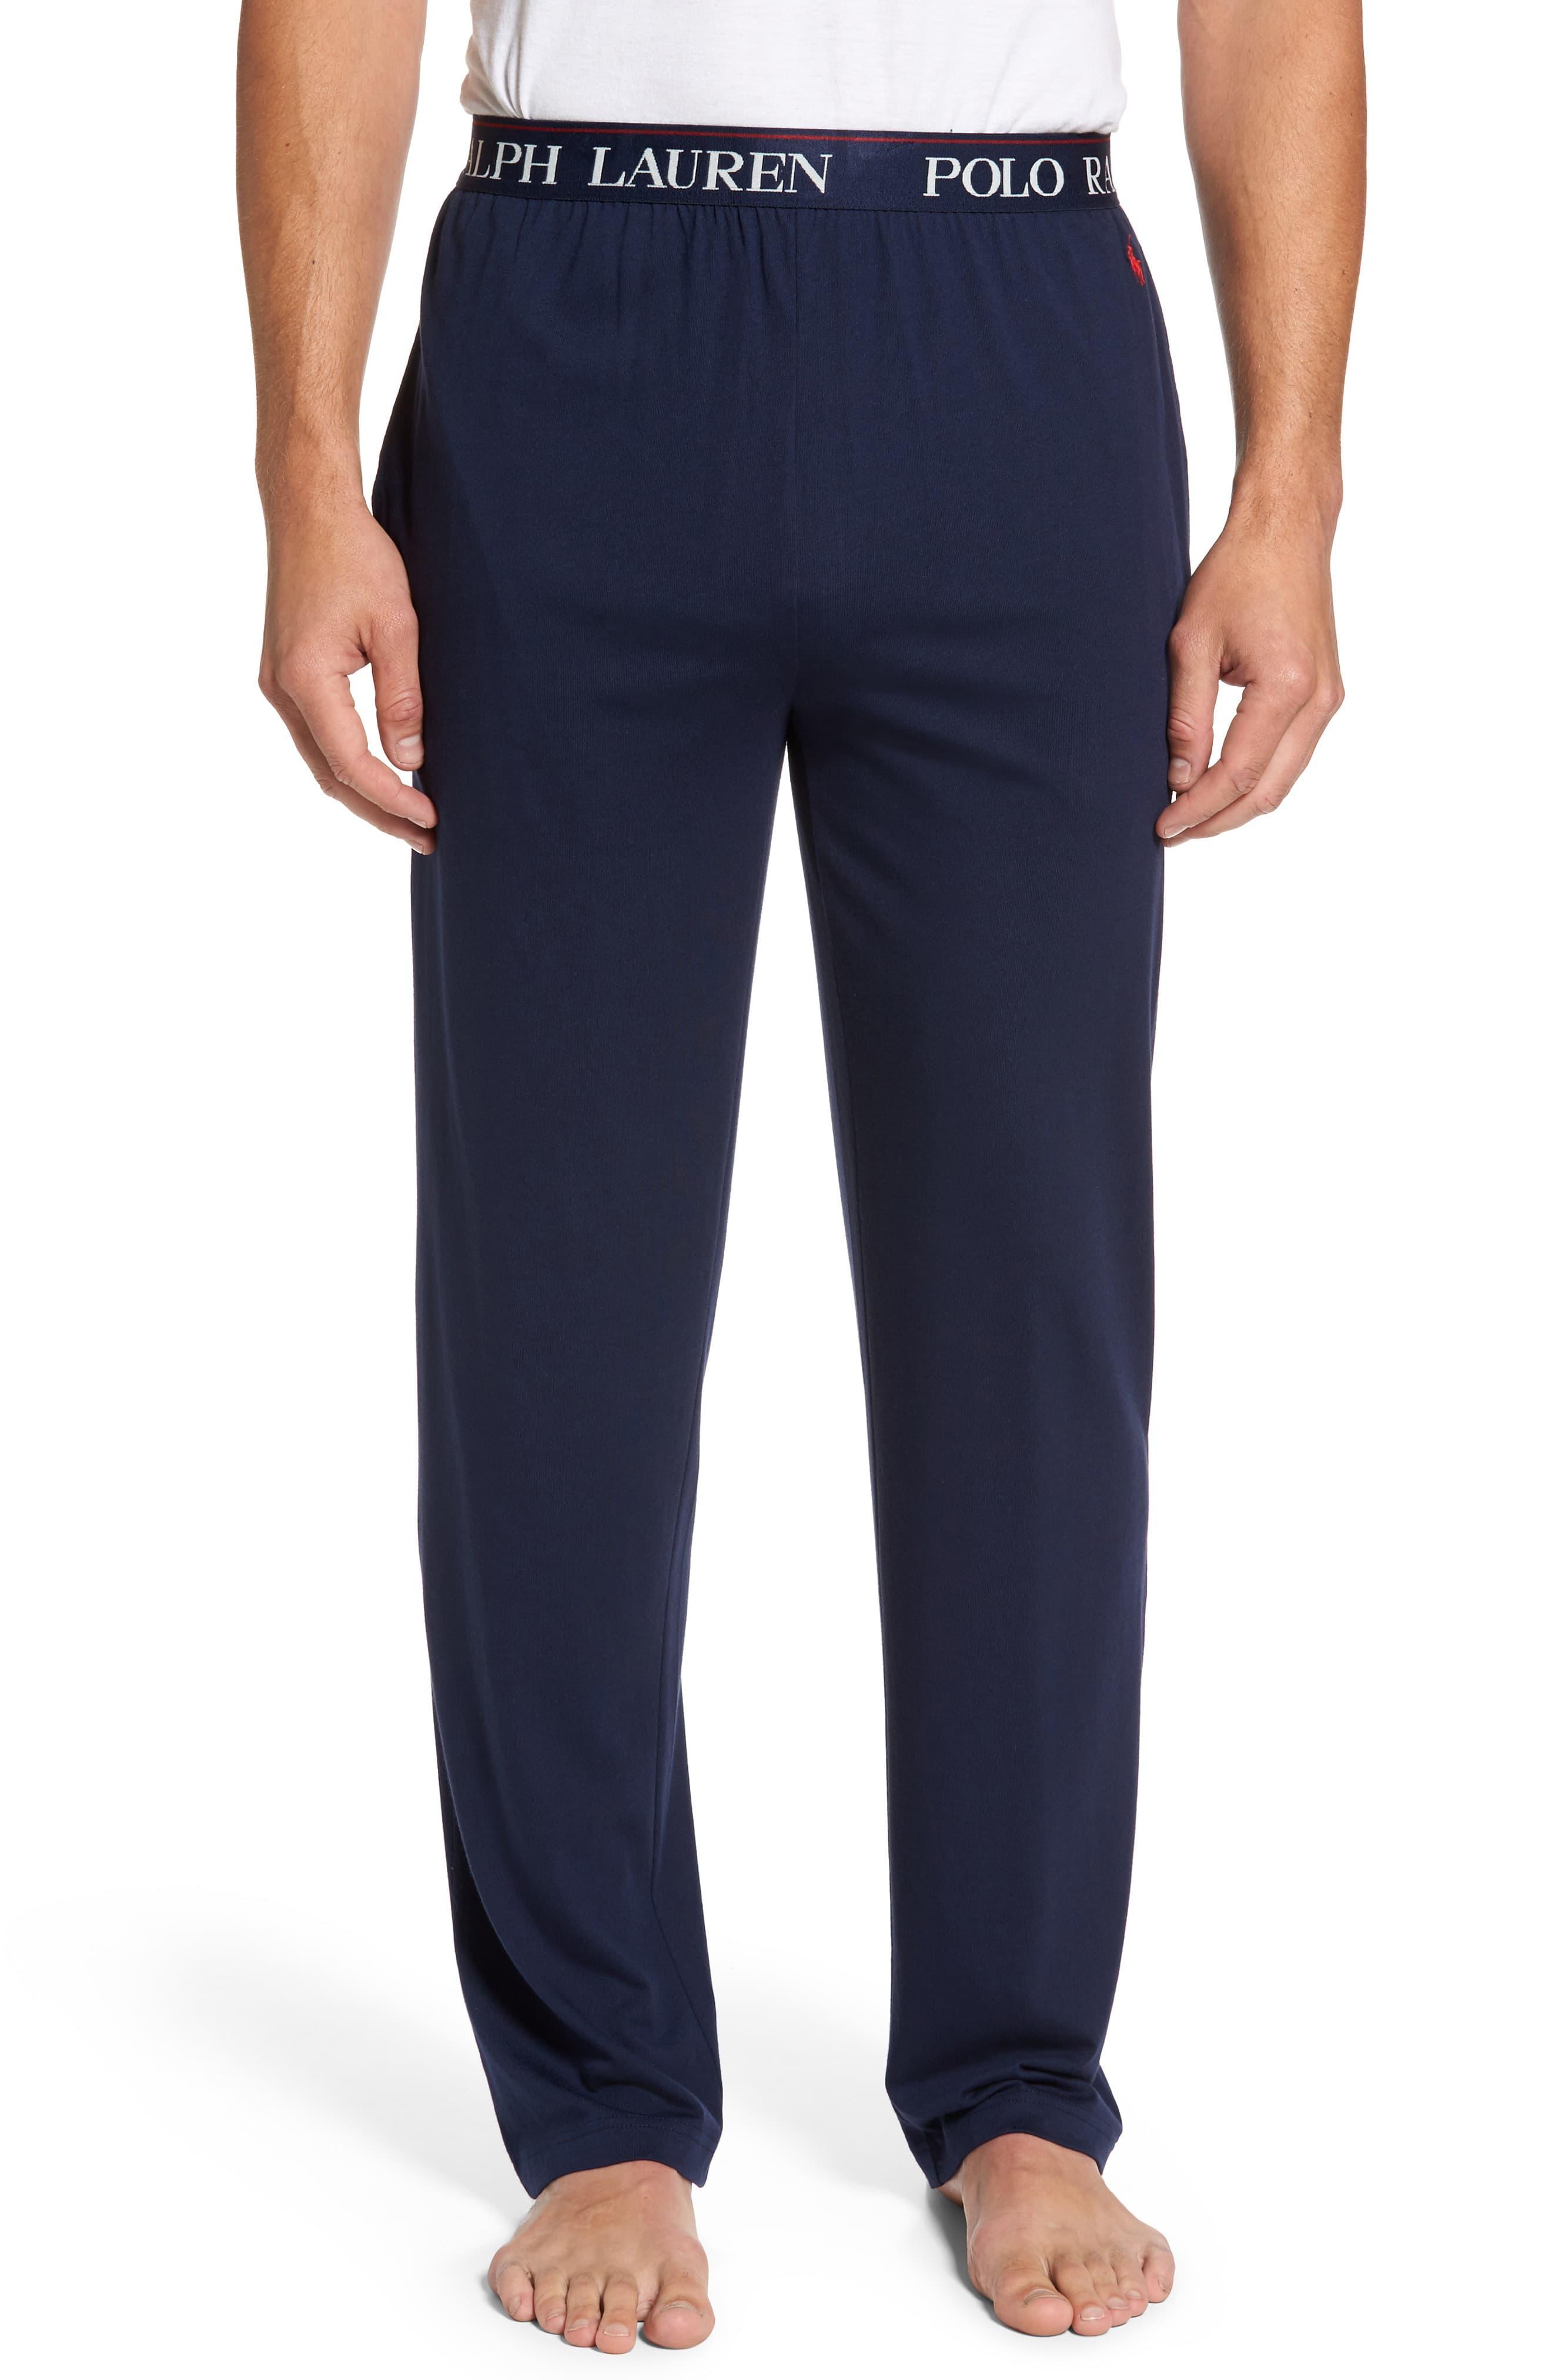 Polo Ralph Lauren Cotton & Modal Lounge Pants in Blue for Men - Lyst